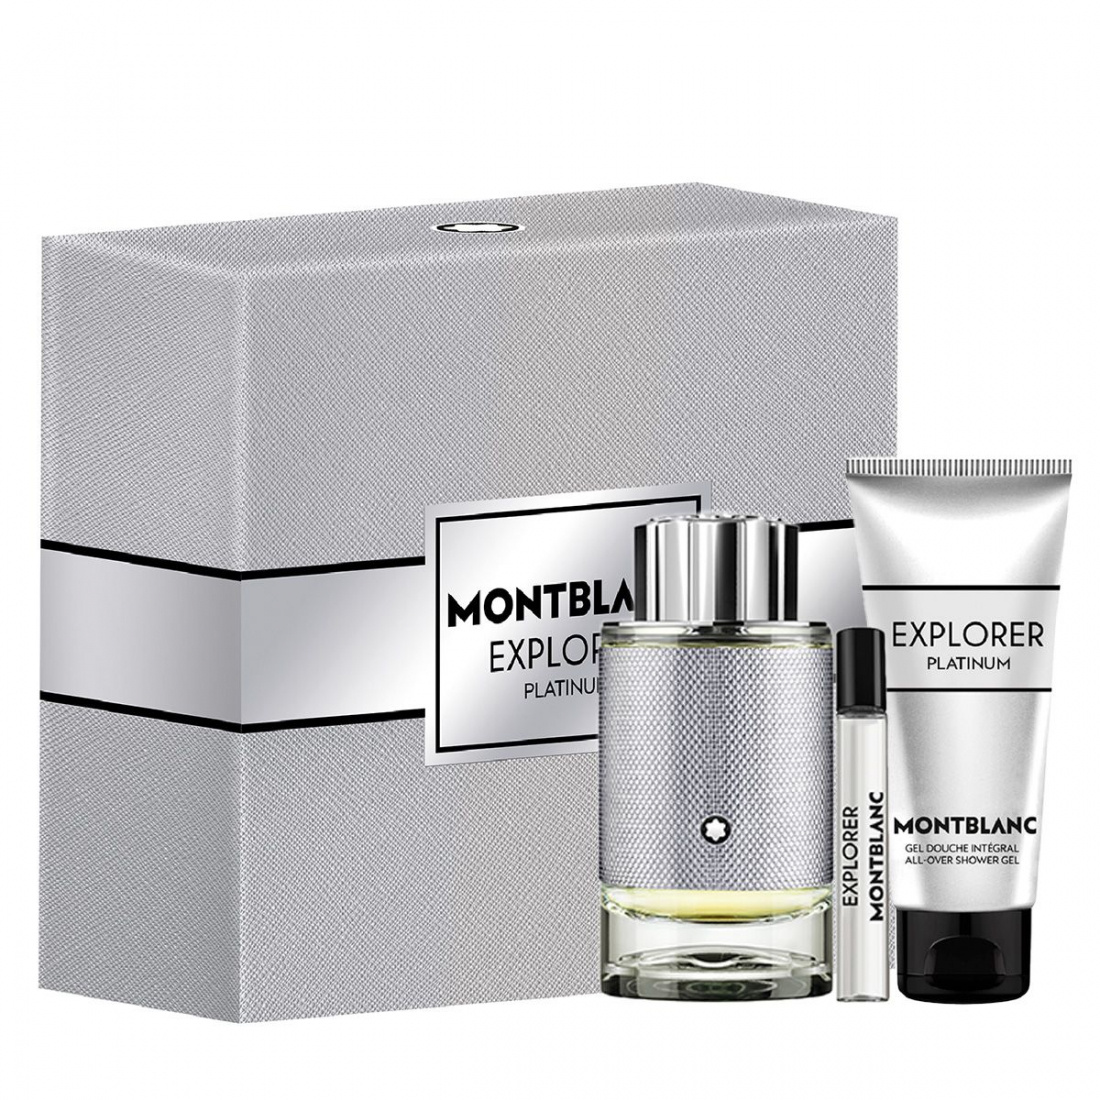 'Mont Blanc Explorer Platinum' Perfume Set - 3 Pieces